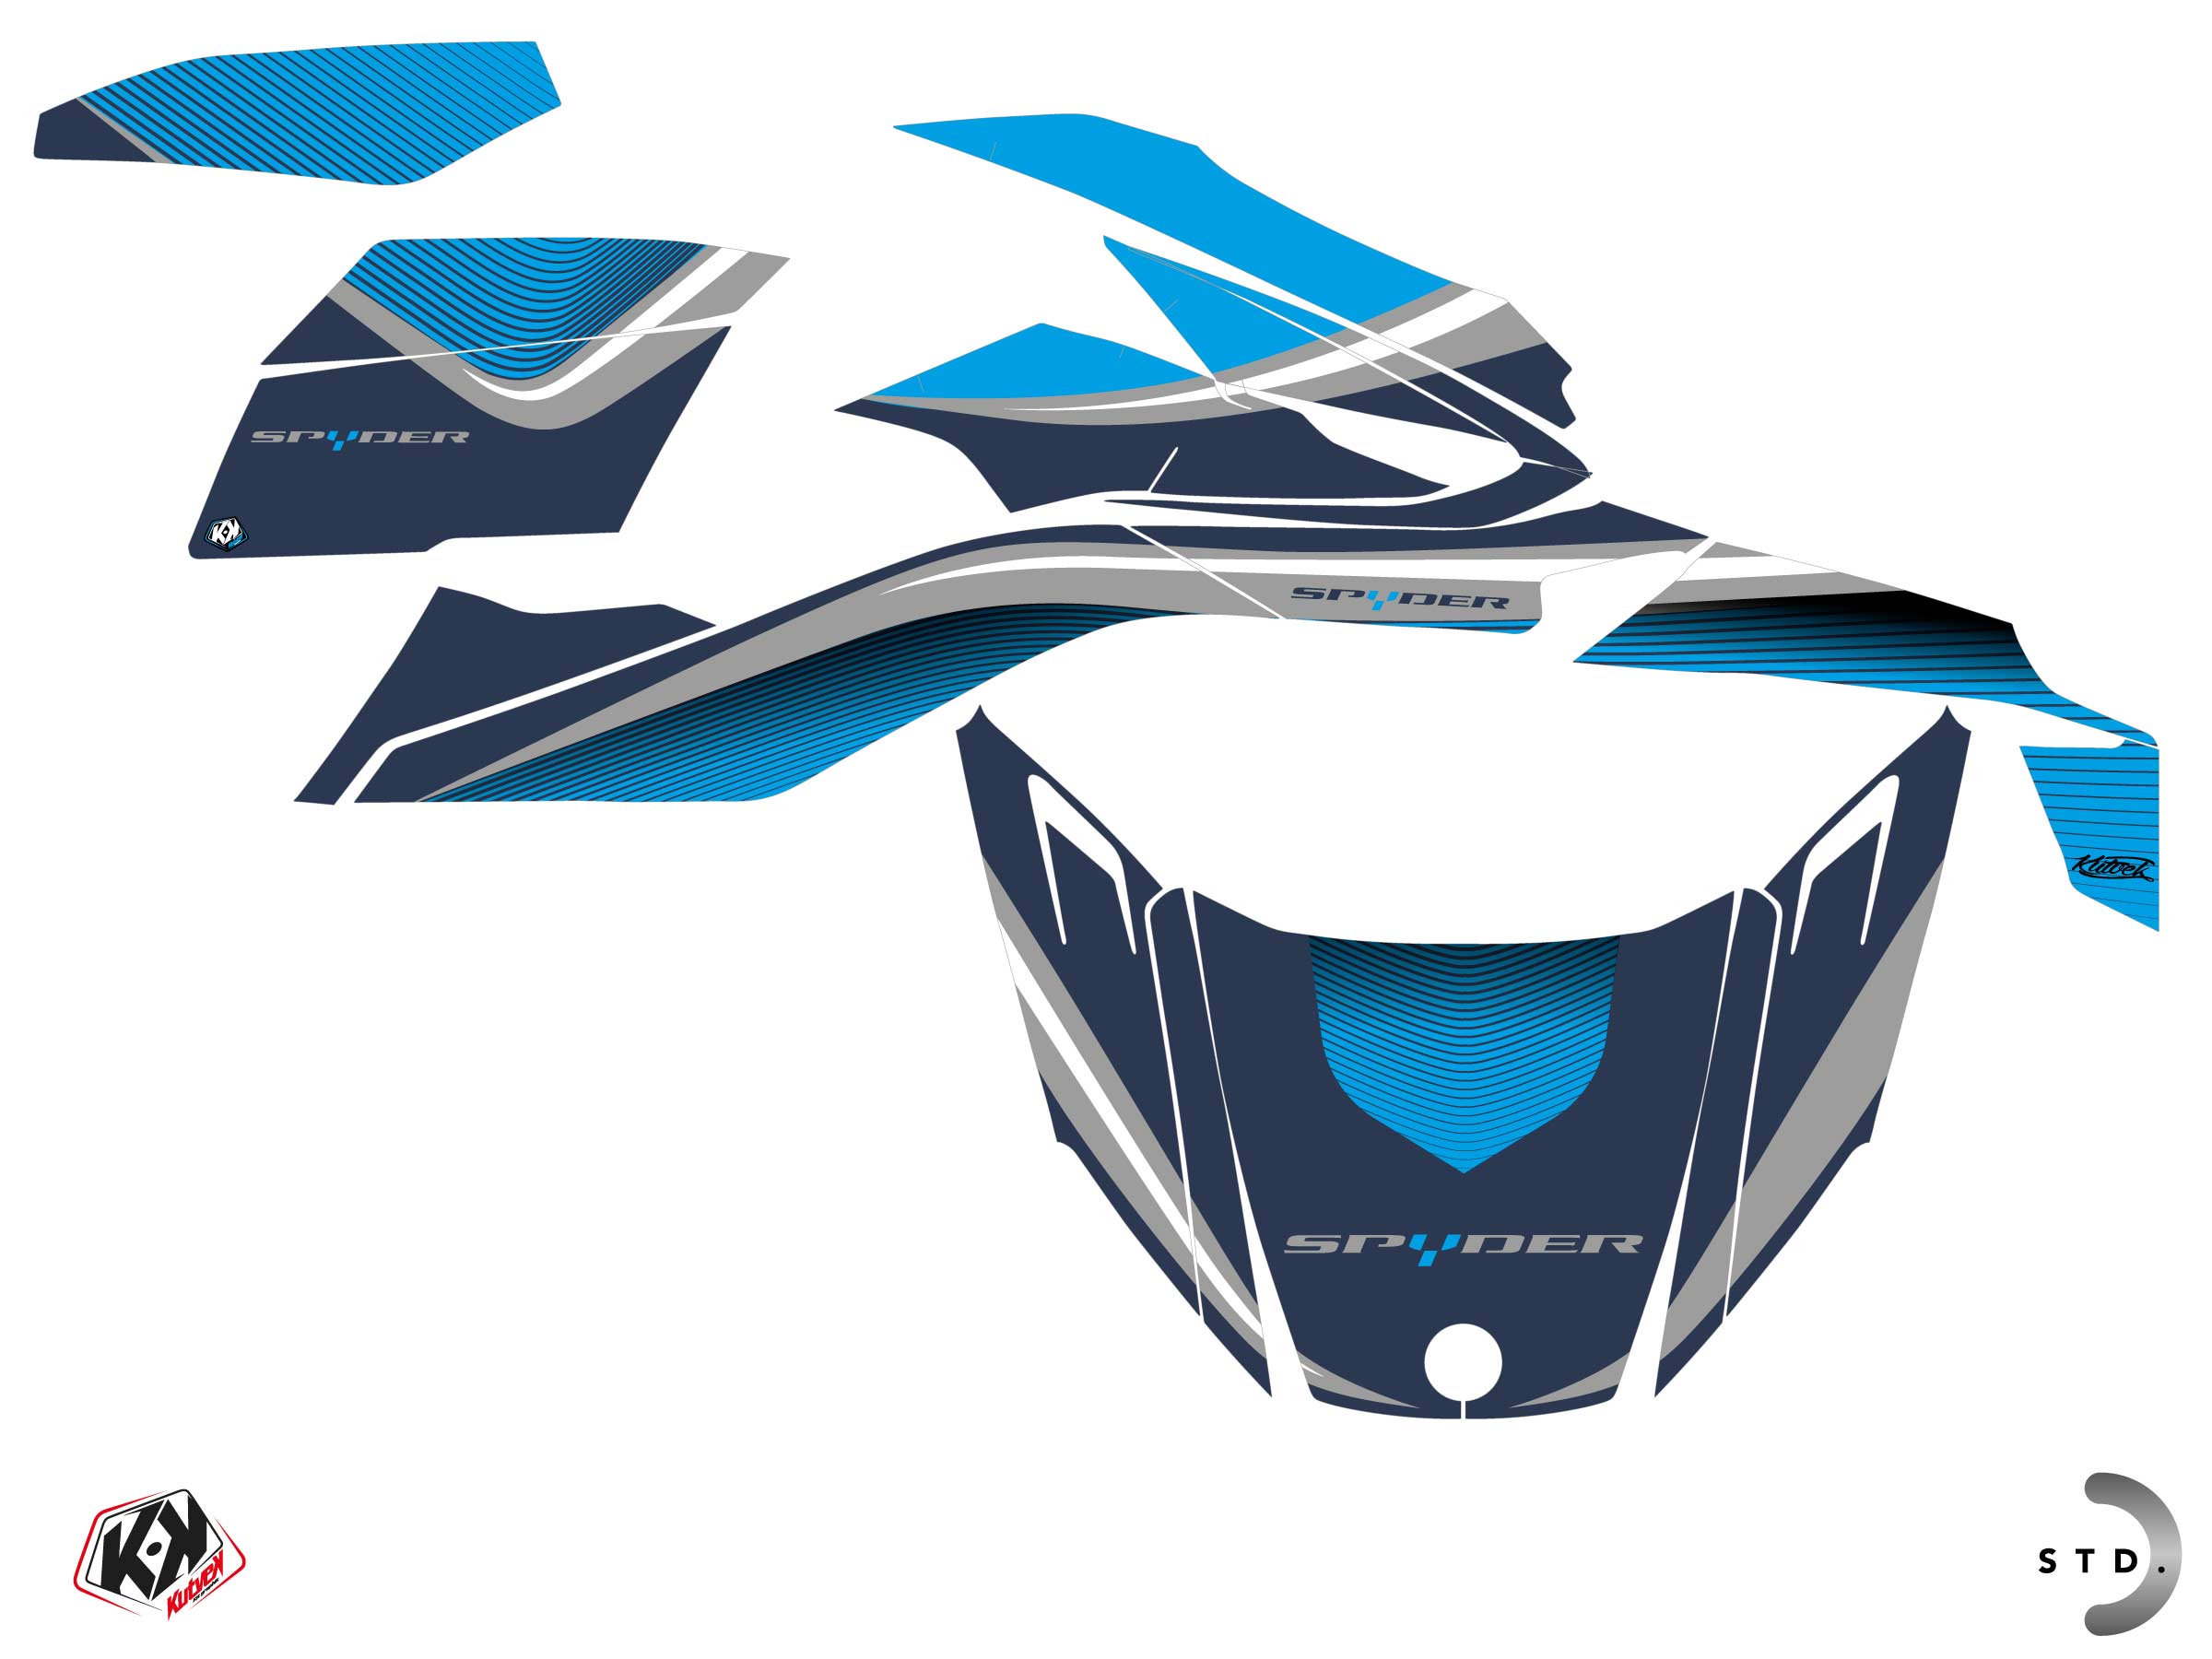 Kit Déco Hybride Wave Can-am Spyder Rt Bleu